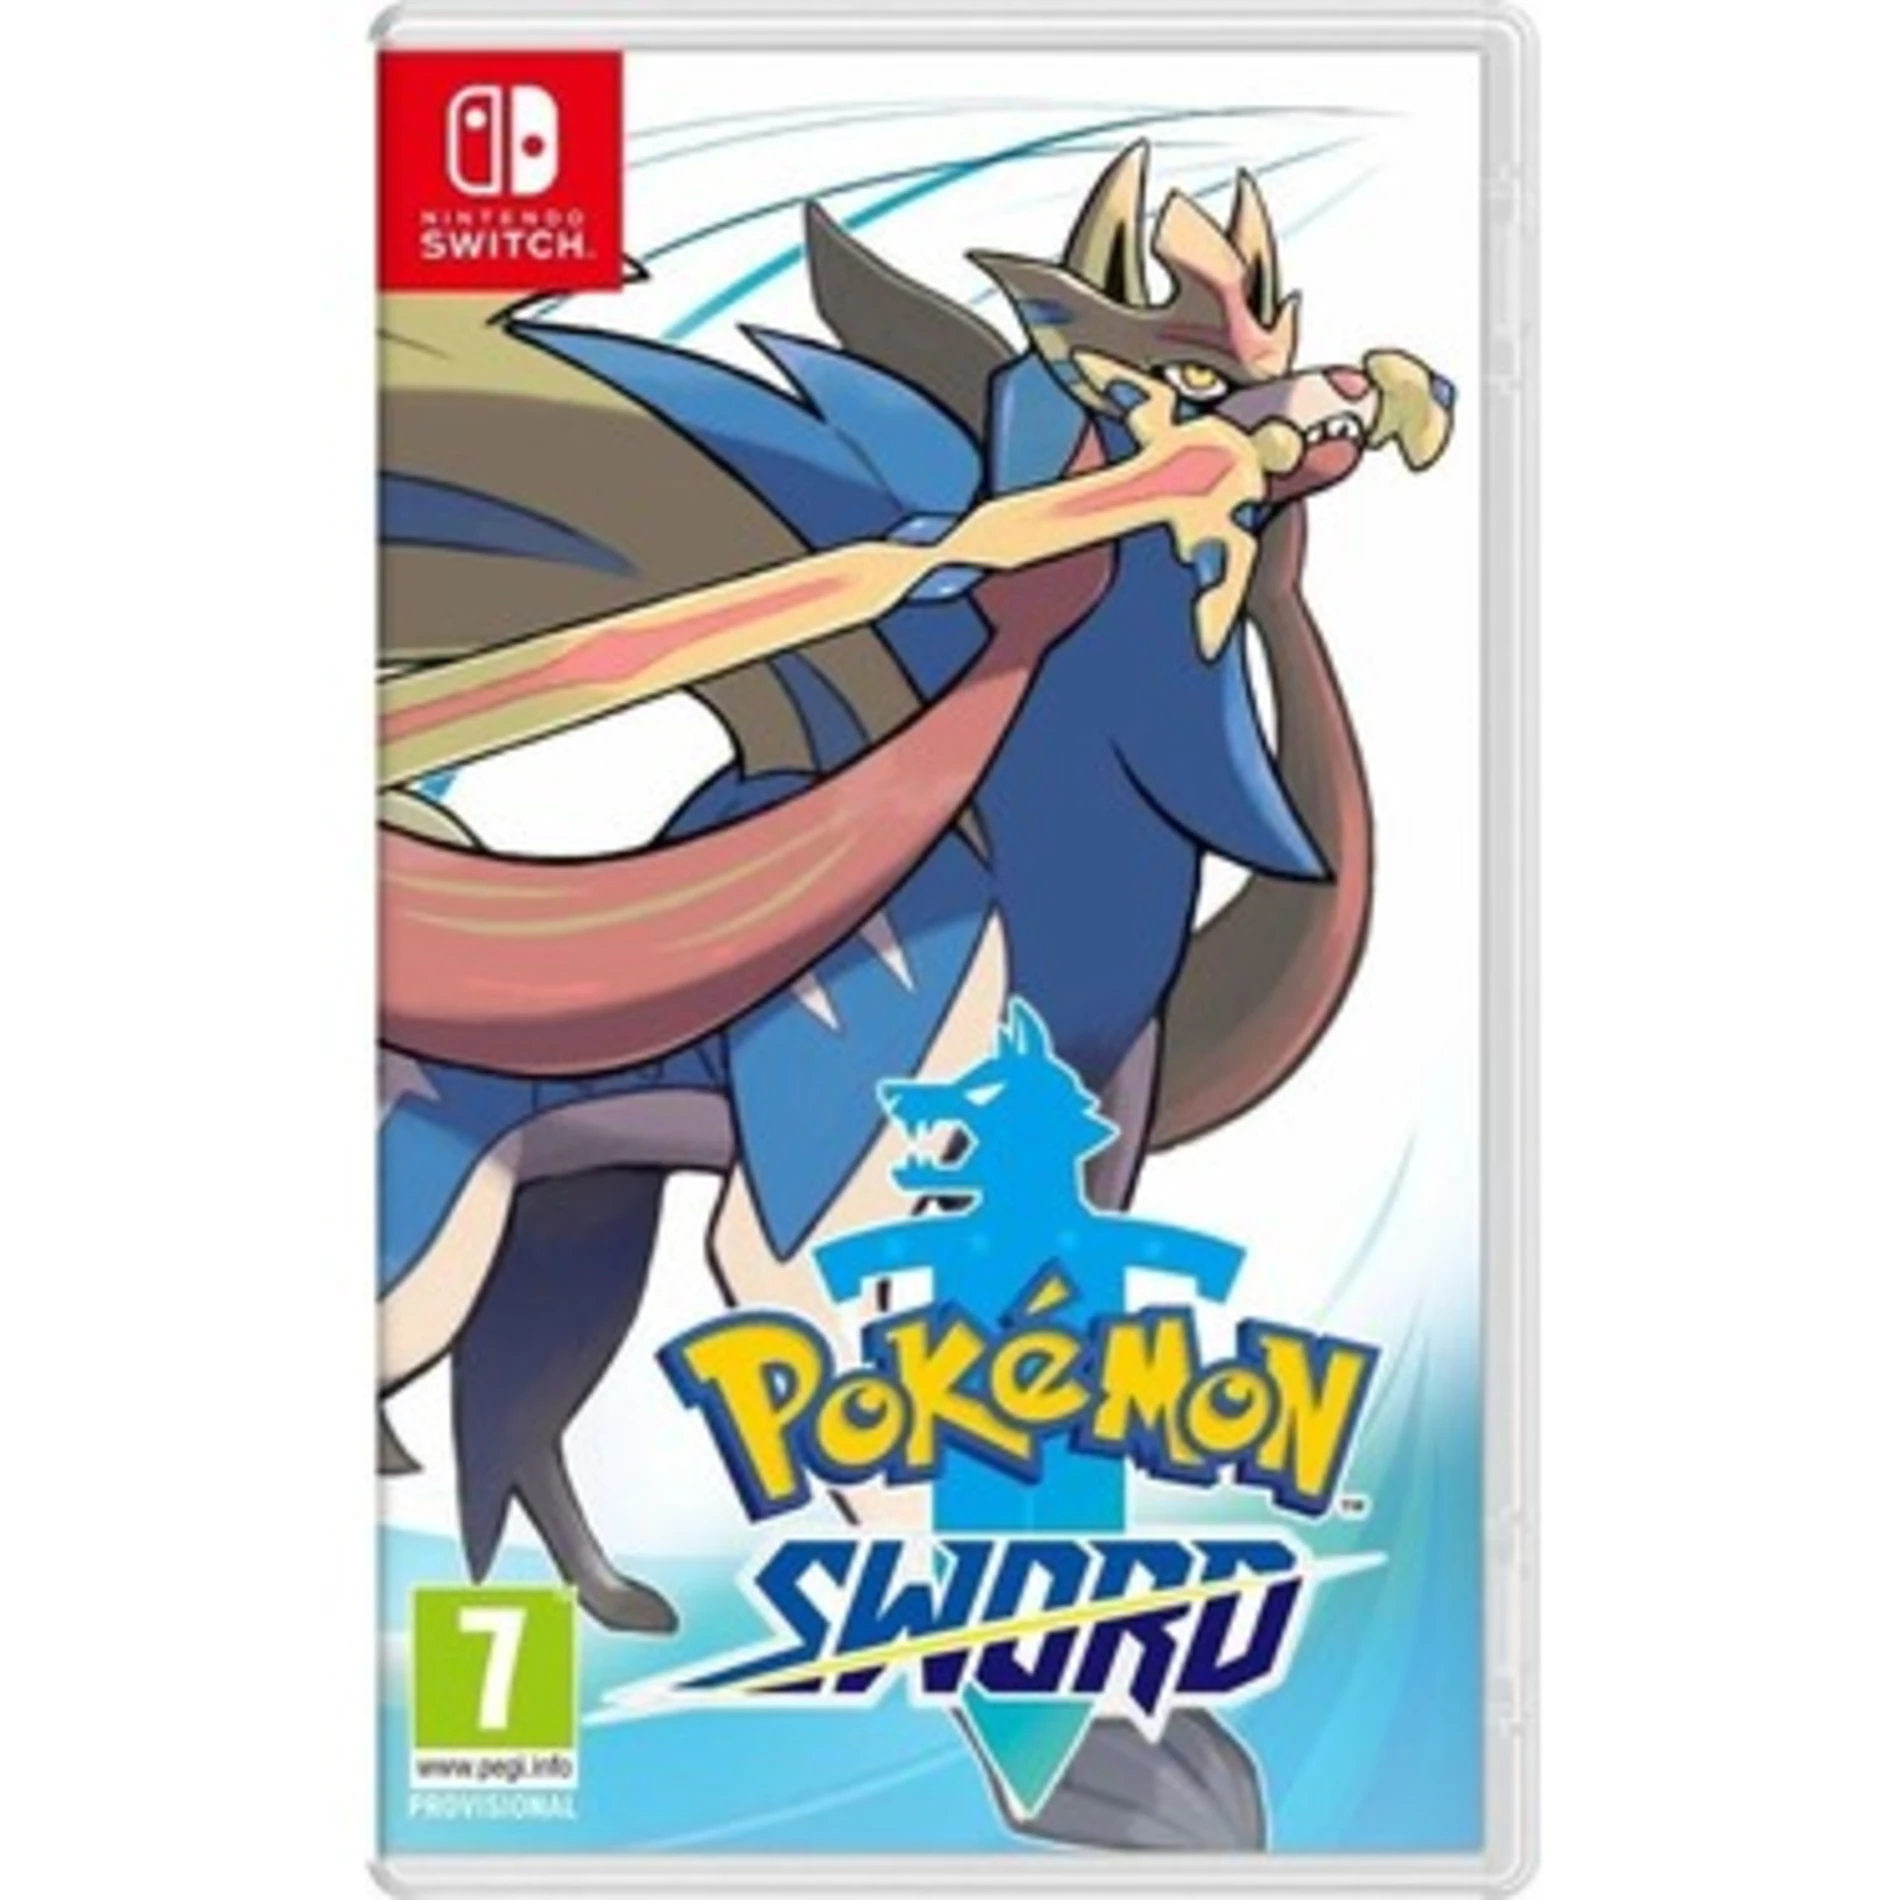 Pokemon Sword - Nintendo Switch Oyun [SIFIR]